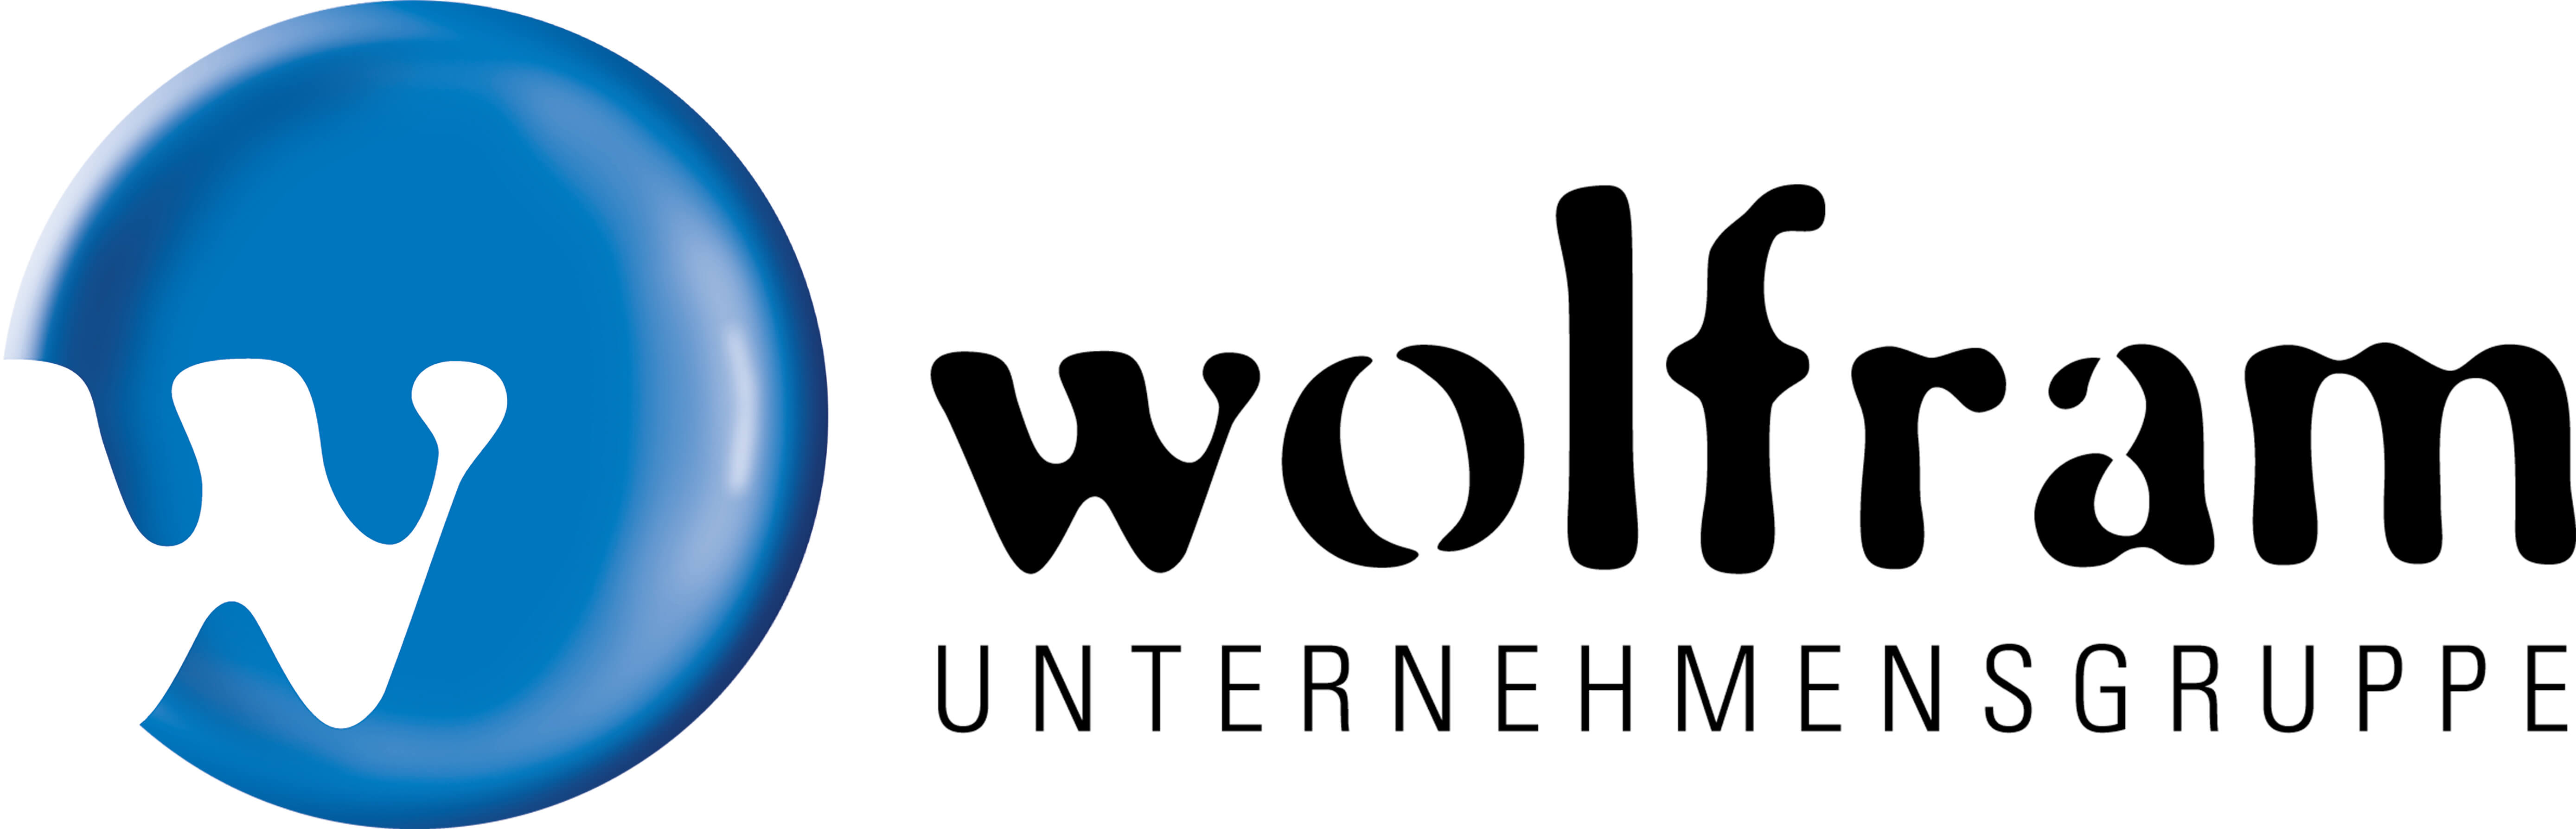 Logo Wolfram